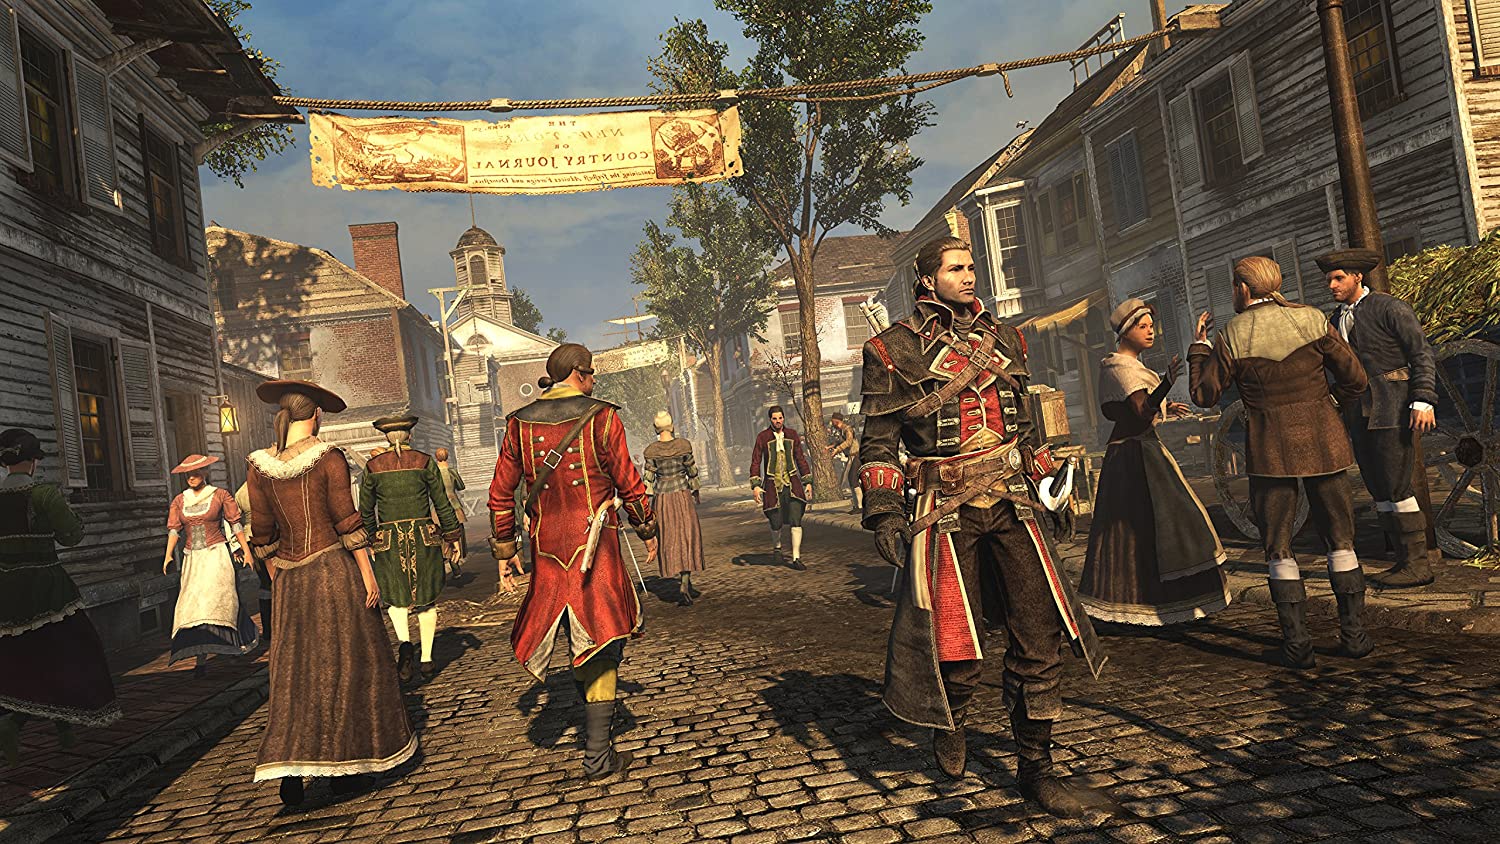 Assassin's Creed Rogue: Assassin Hunter Gameplay